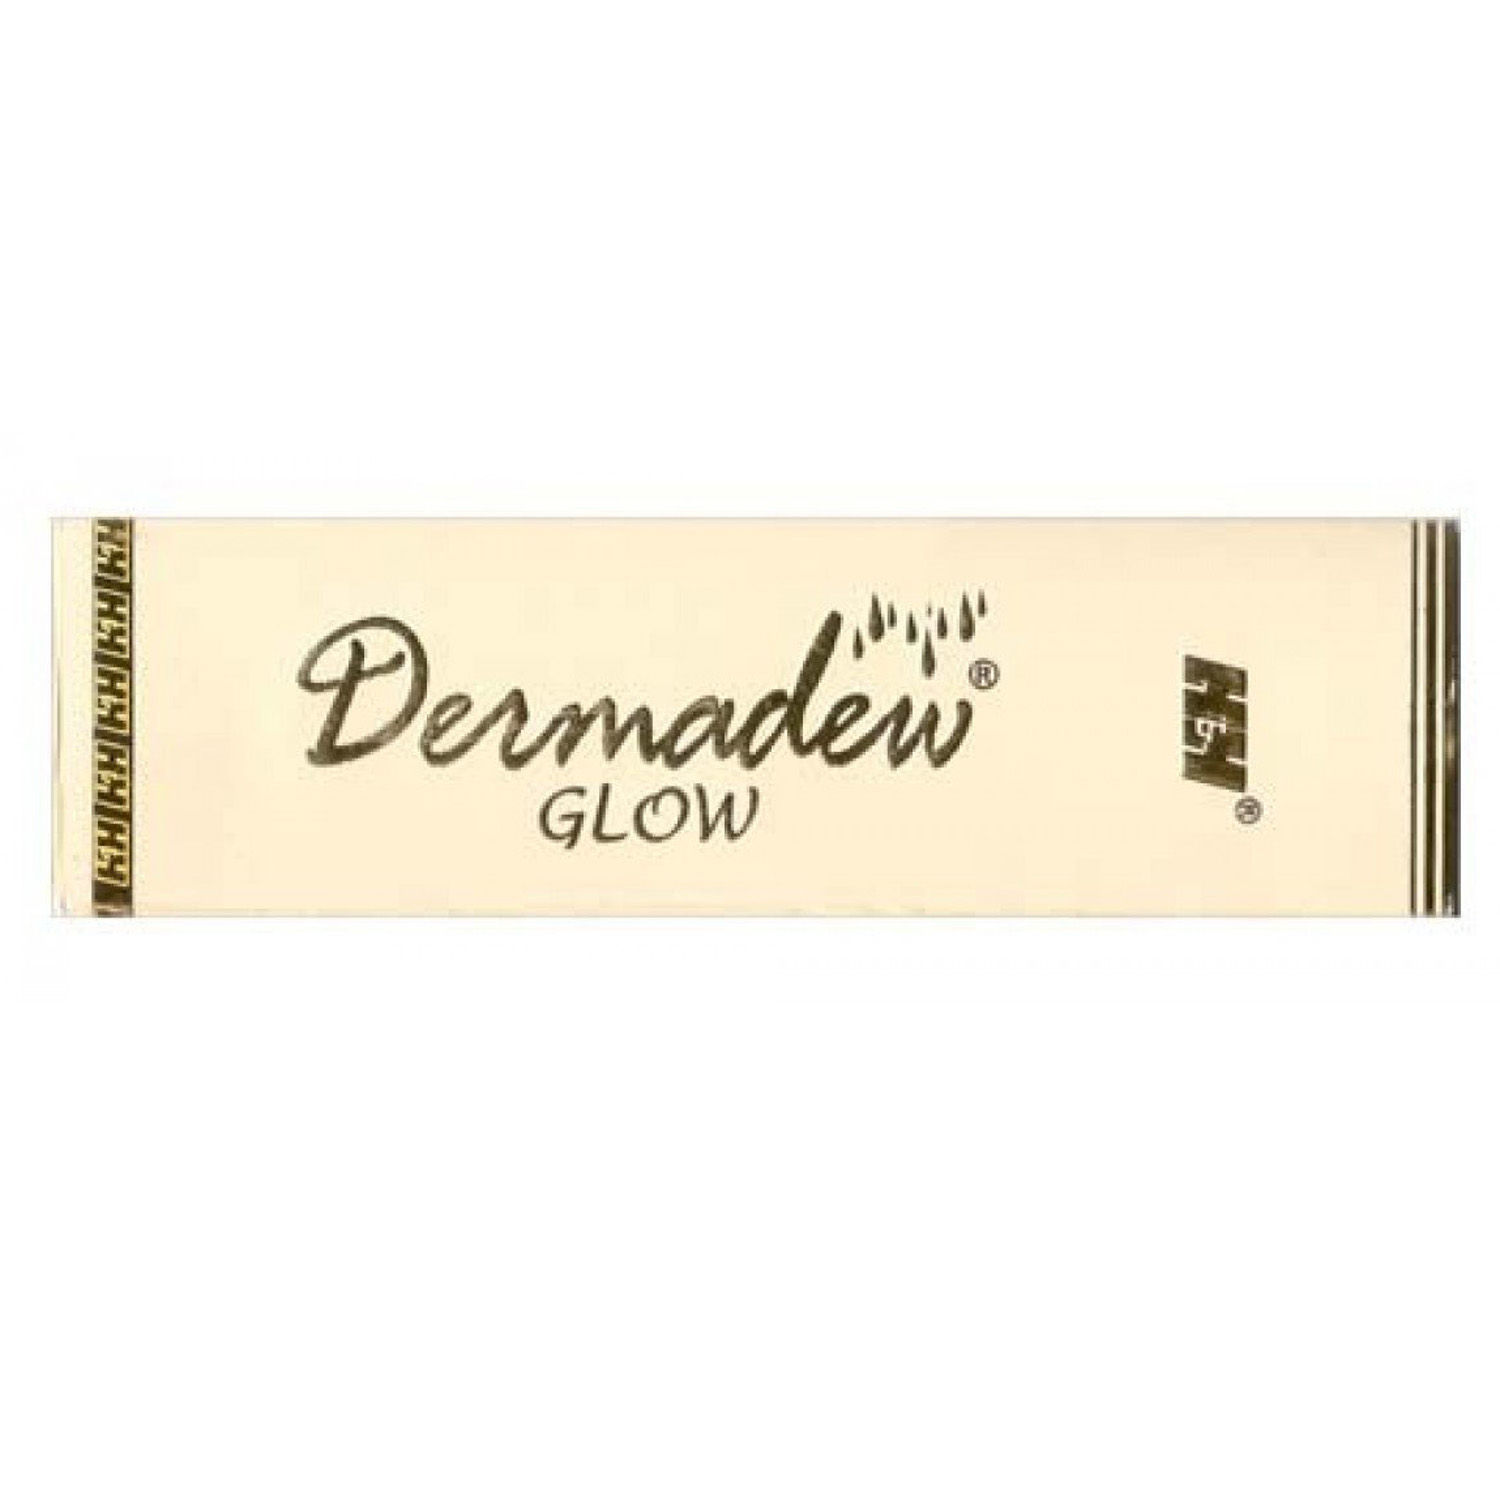 Dermadew Glow Cream, 50 gm, Pack of 1 